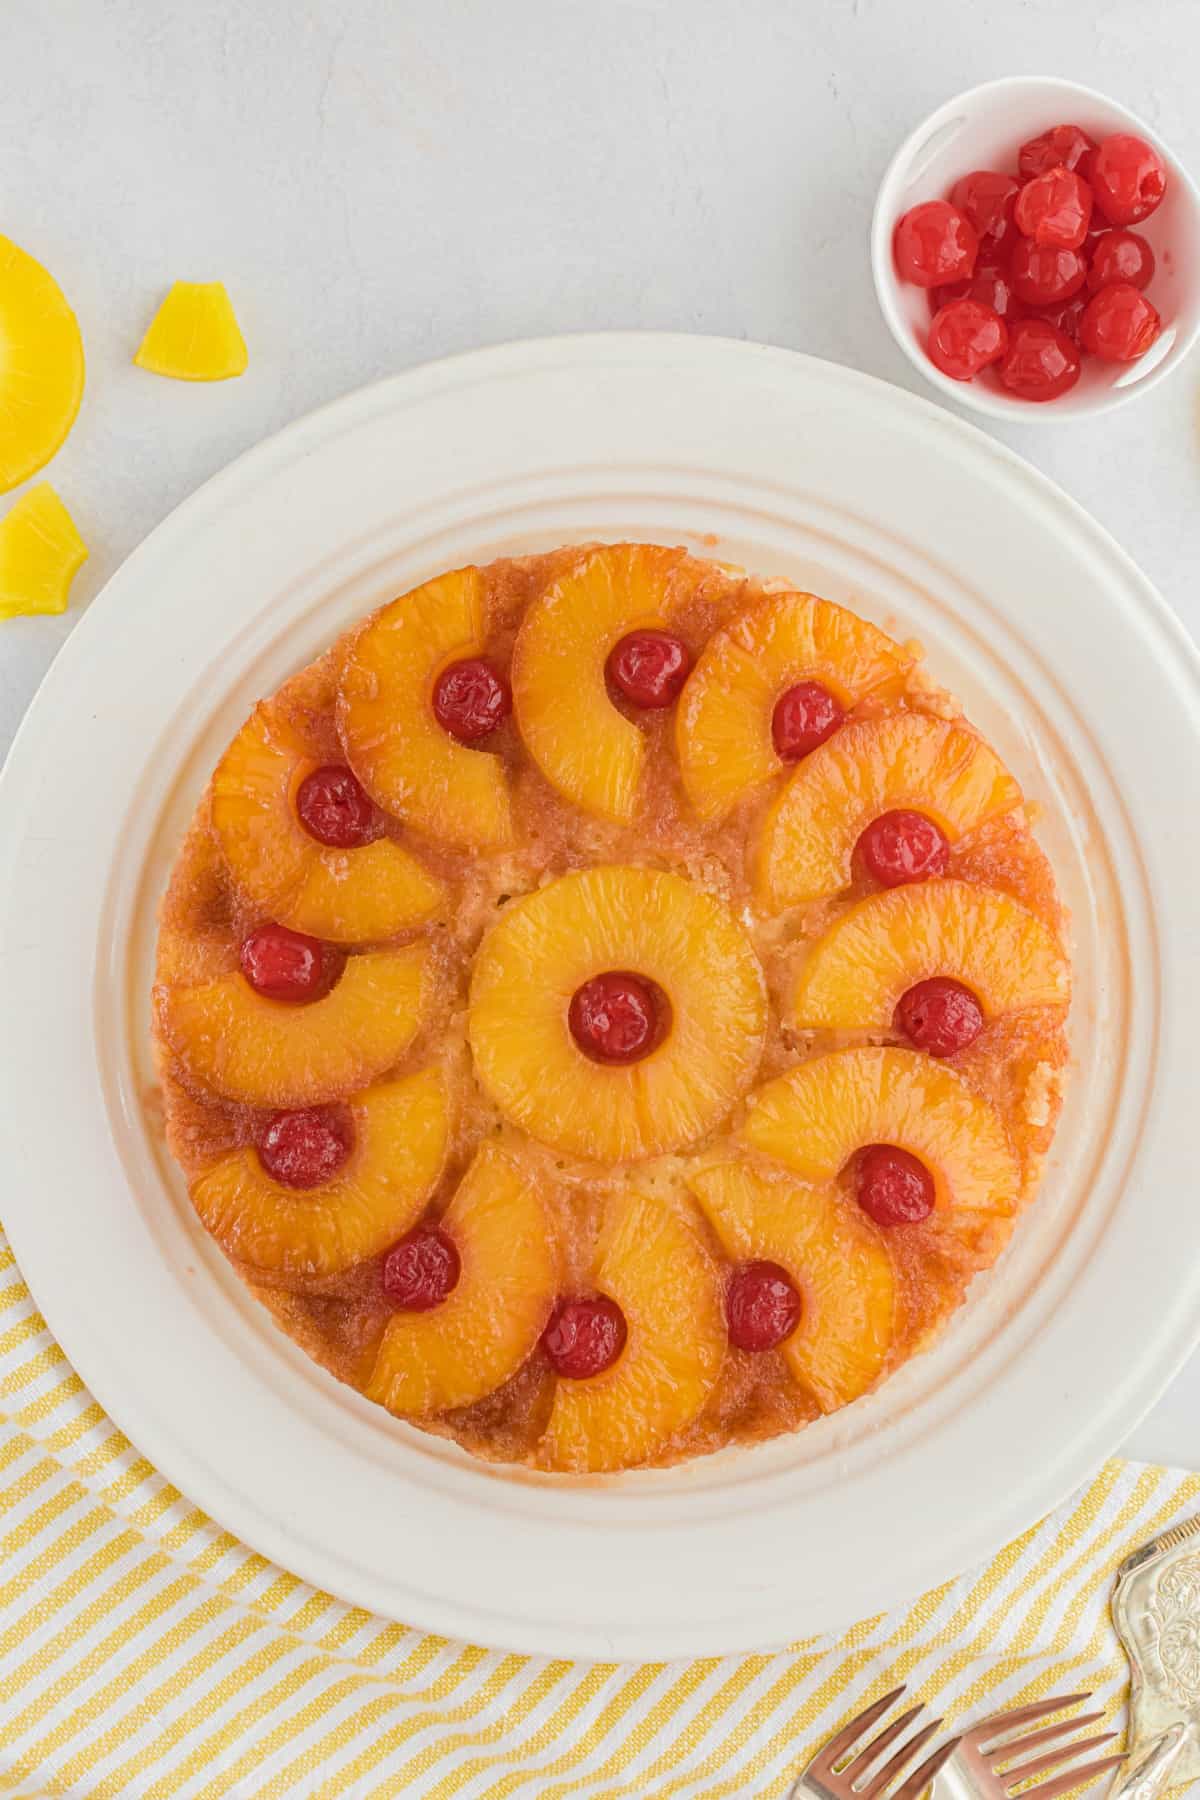 https://www.shugarysweets.com/wp-content/uploads/2020/06/pineapple-upside-down-cake-3.jpg